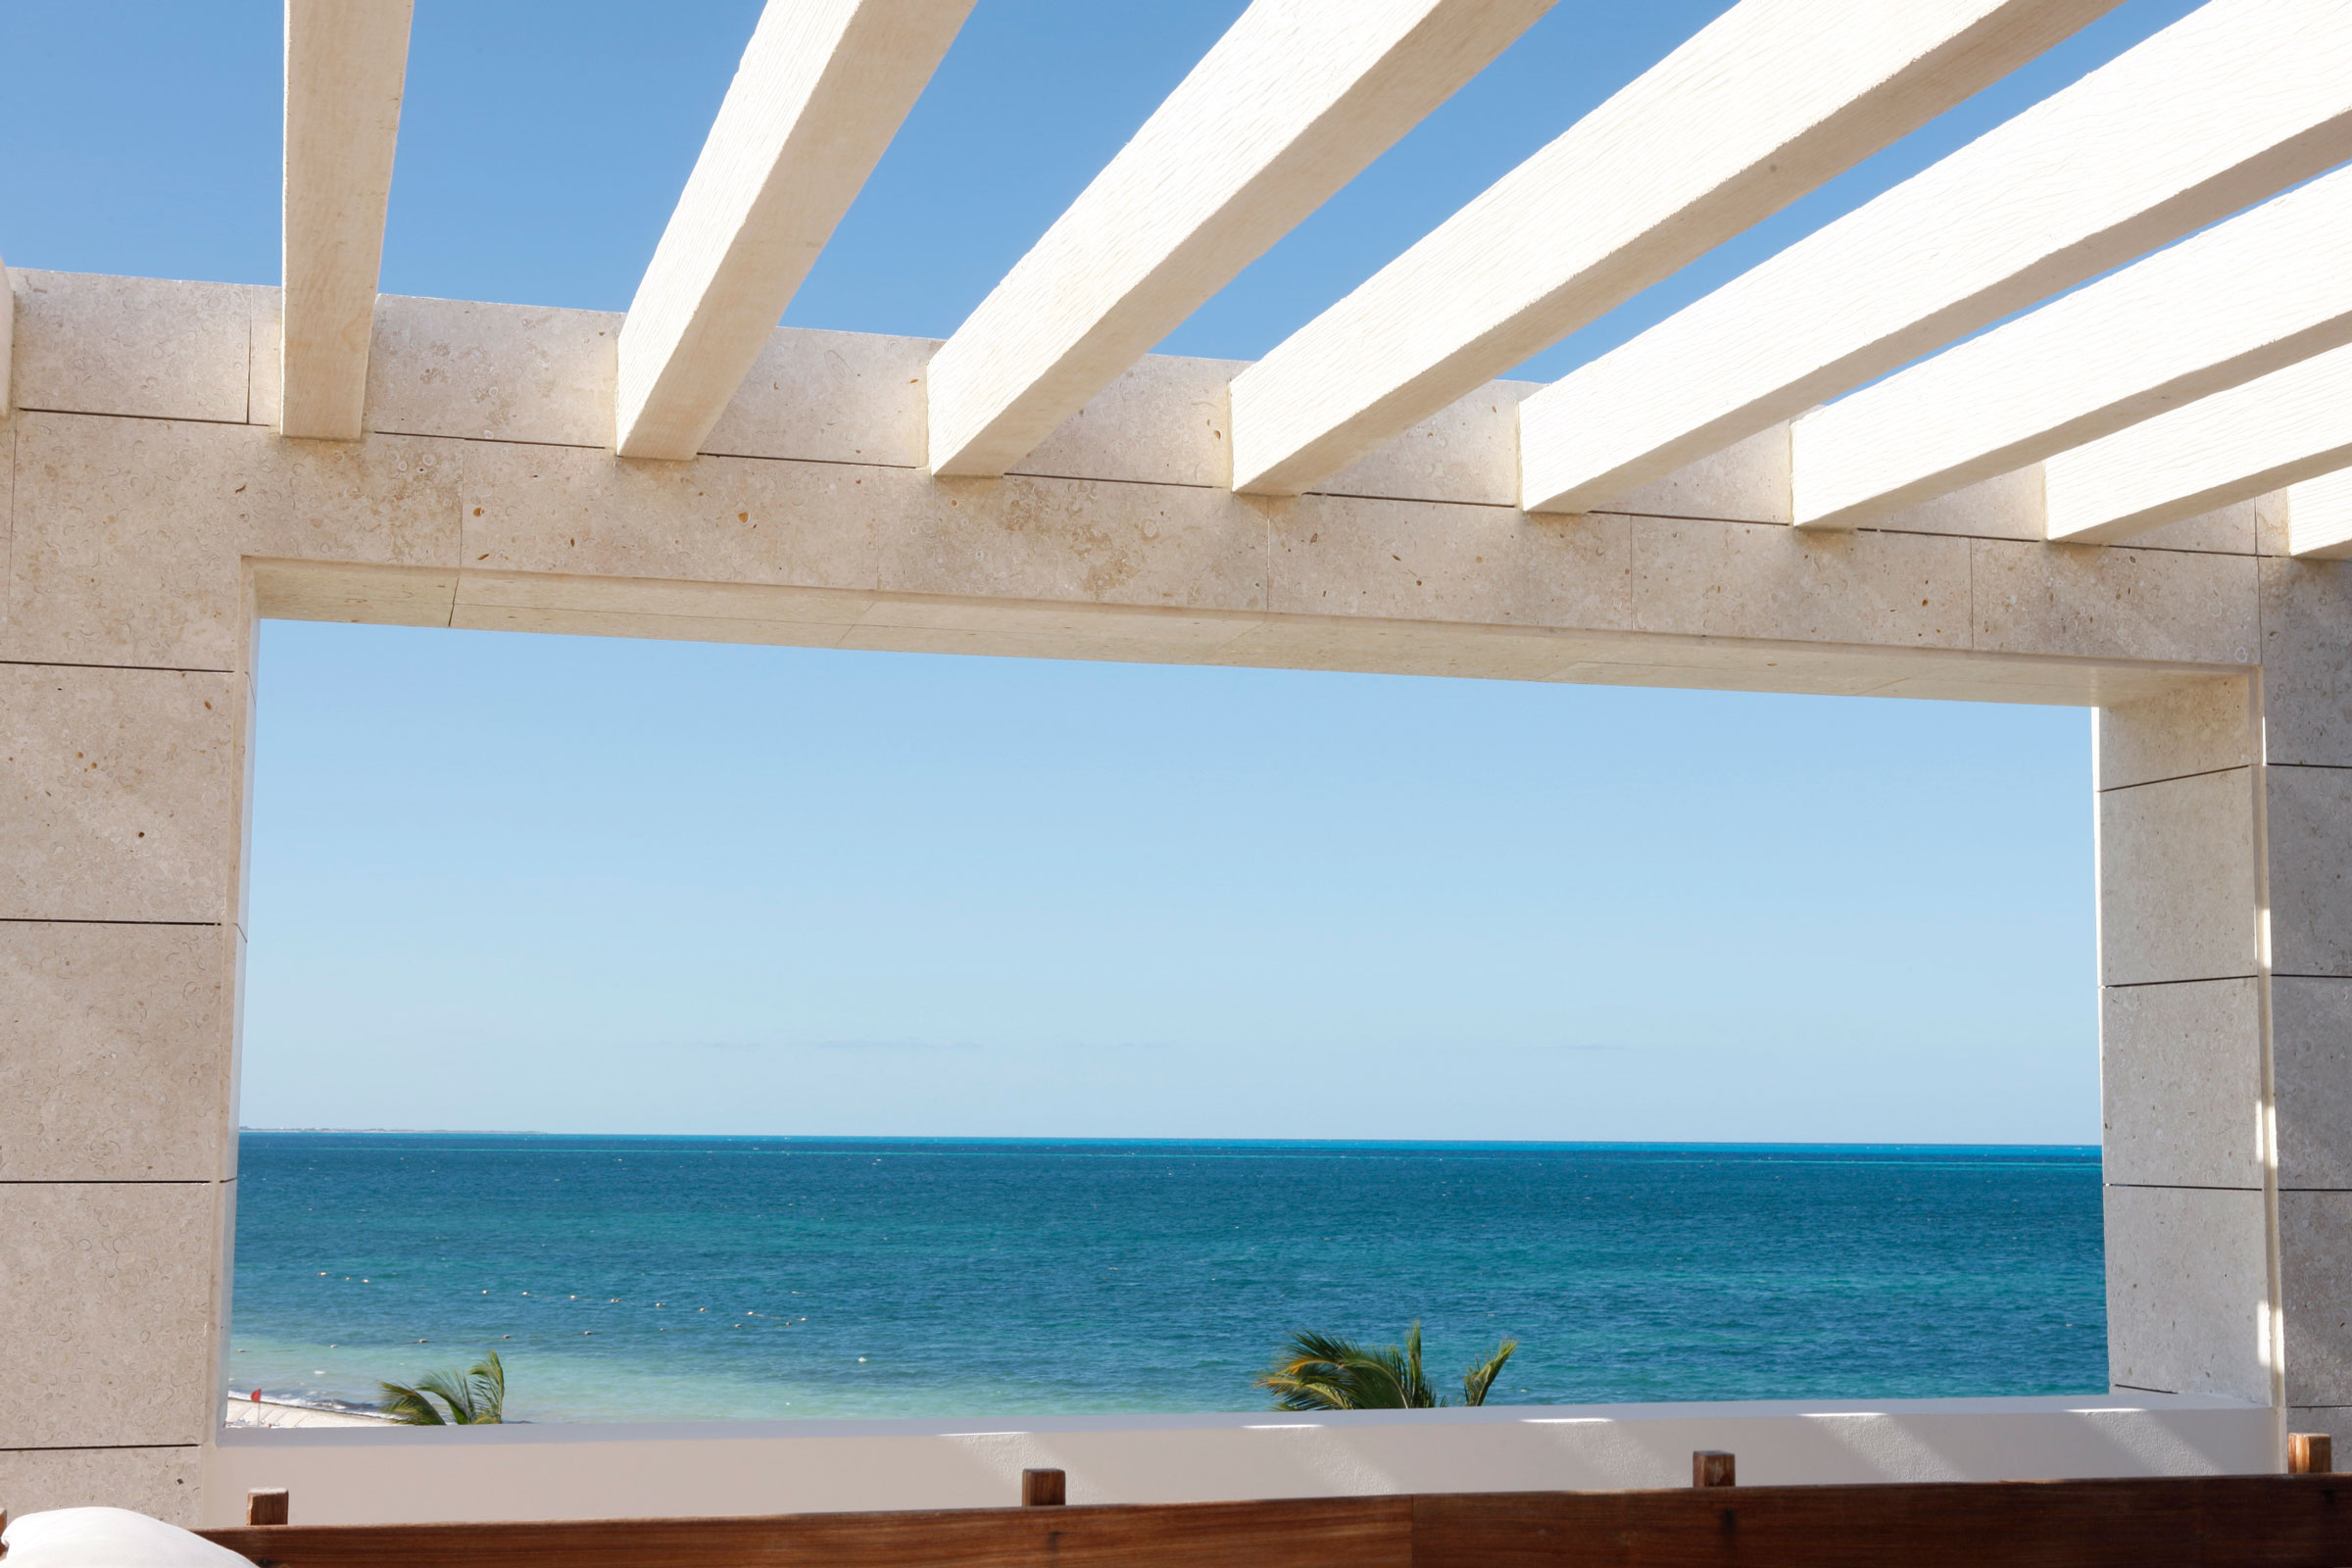 Ocean View Terrace in Cancun